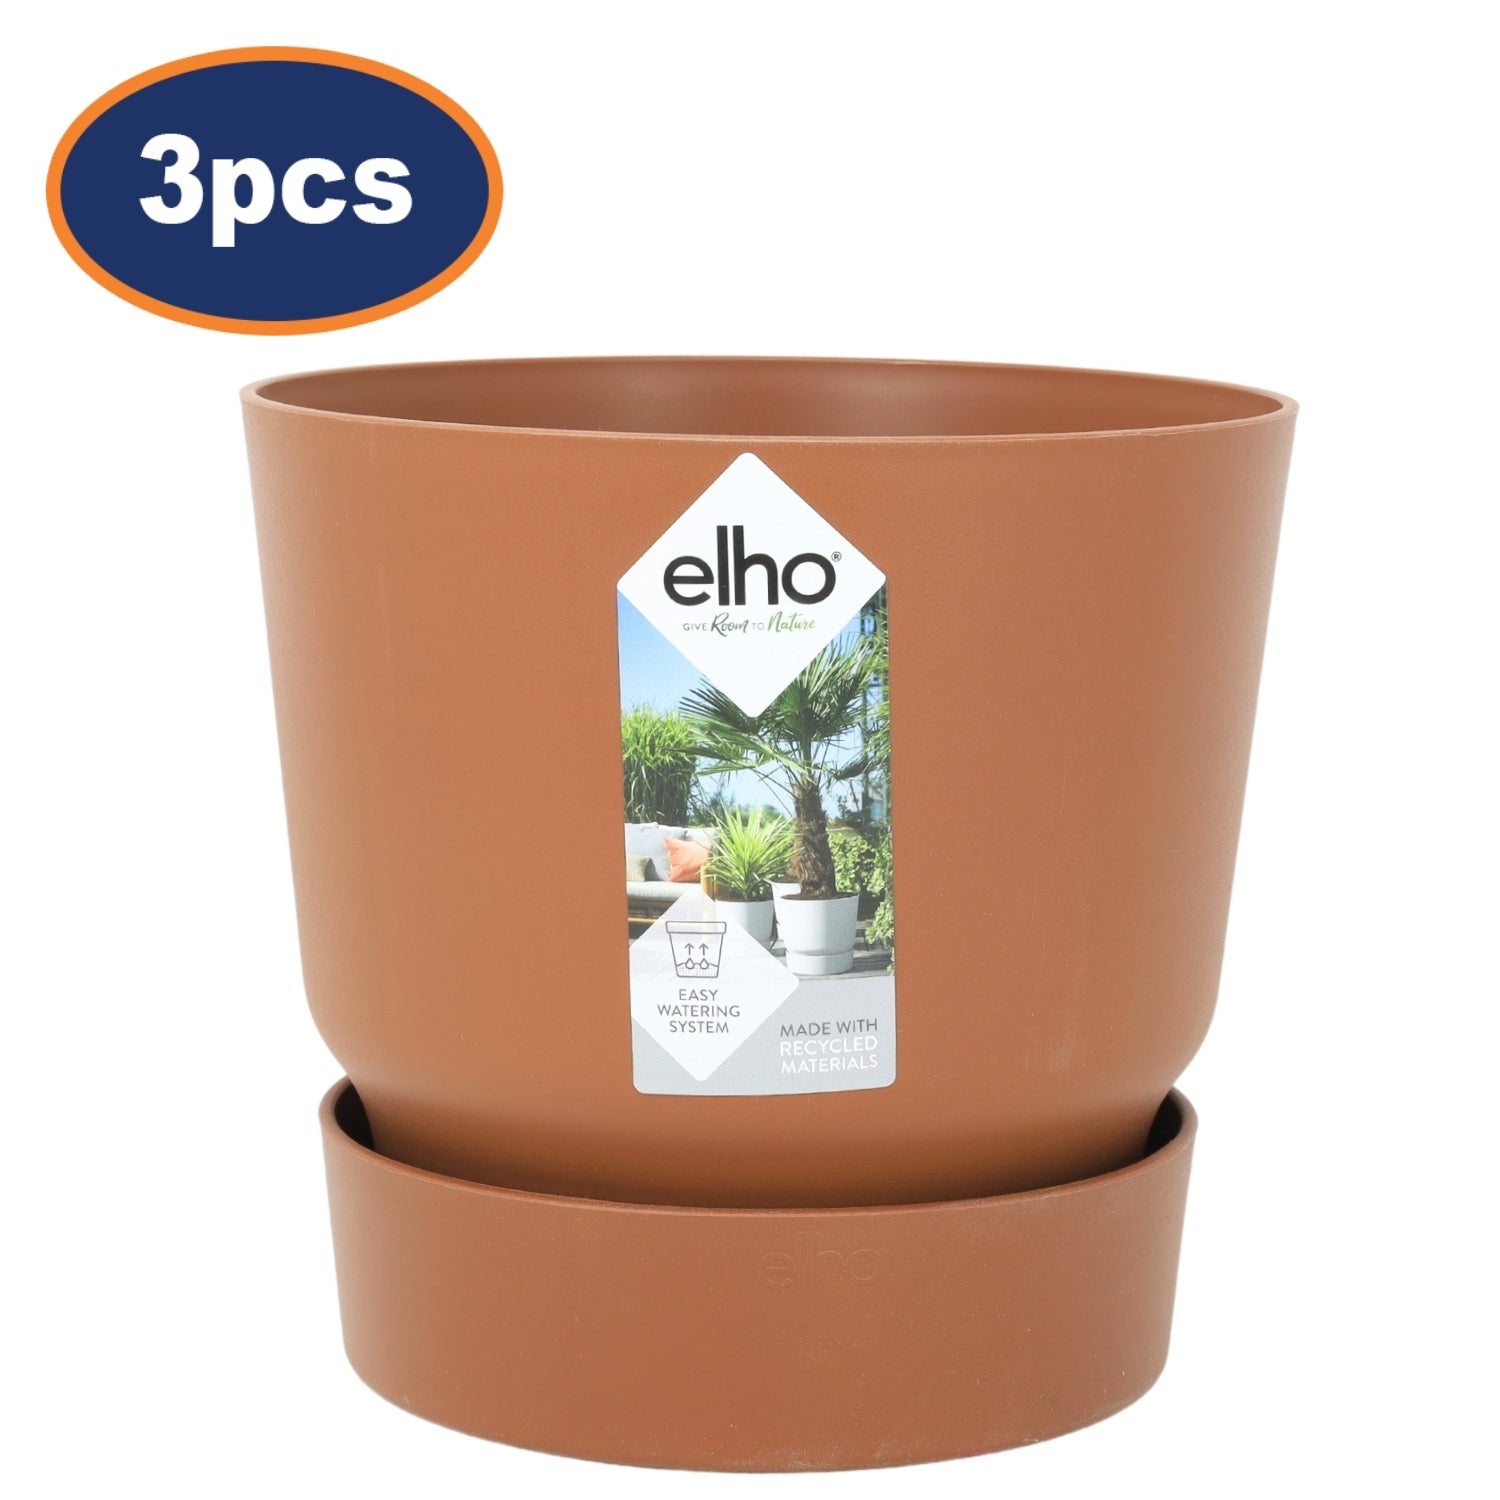 3Pcs Elho 24.5cm Ginger Brown Round Plastic Planters